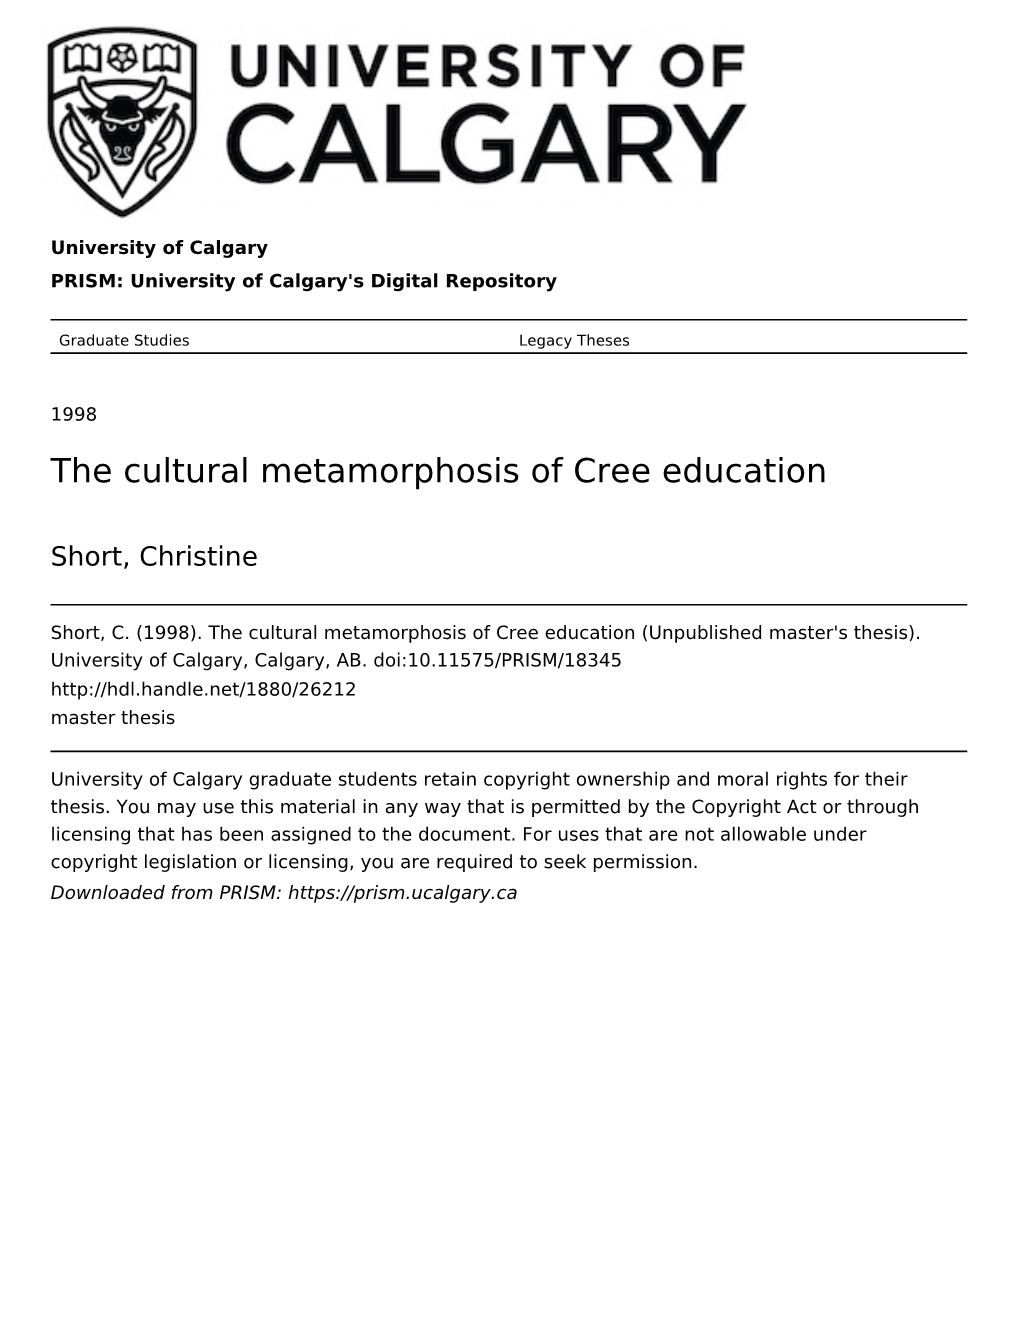 The Cultural Metamorphosis of Cree Education